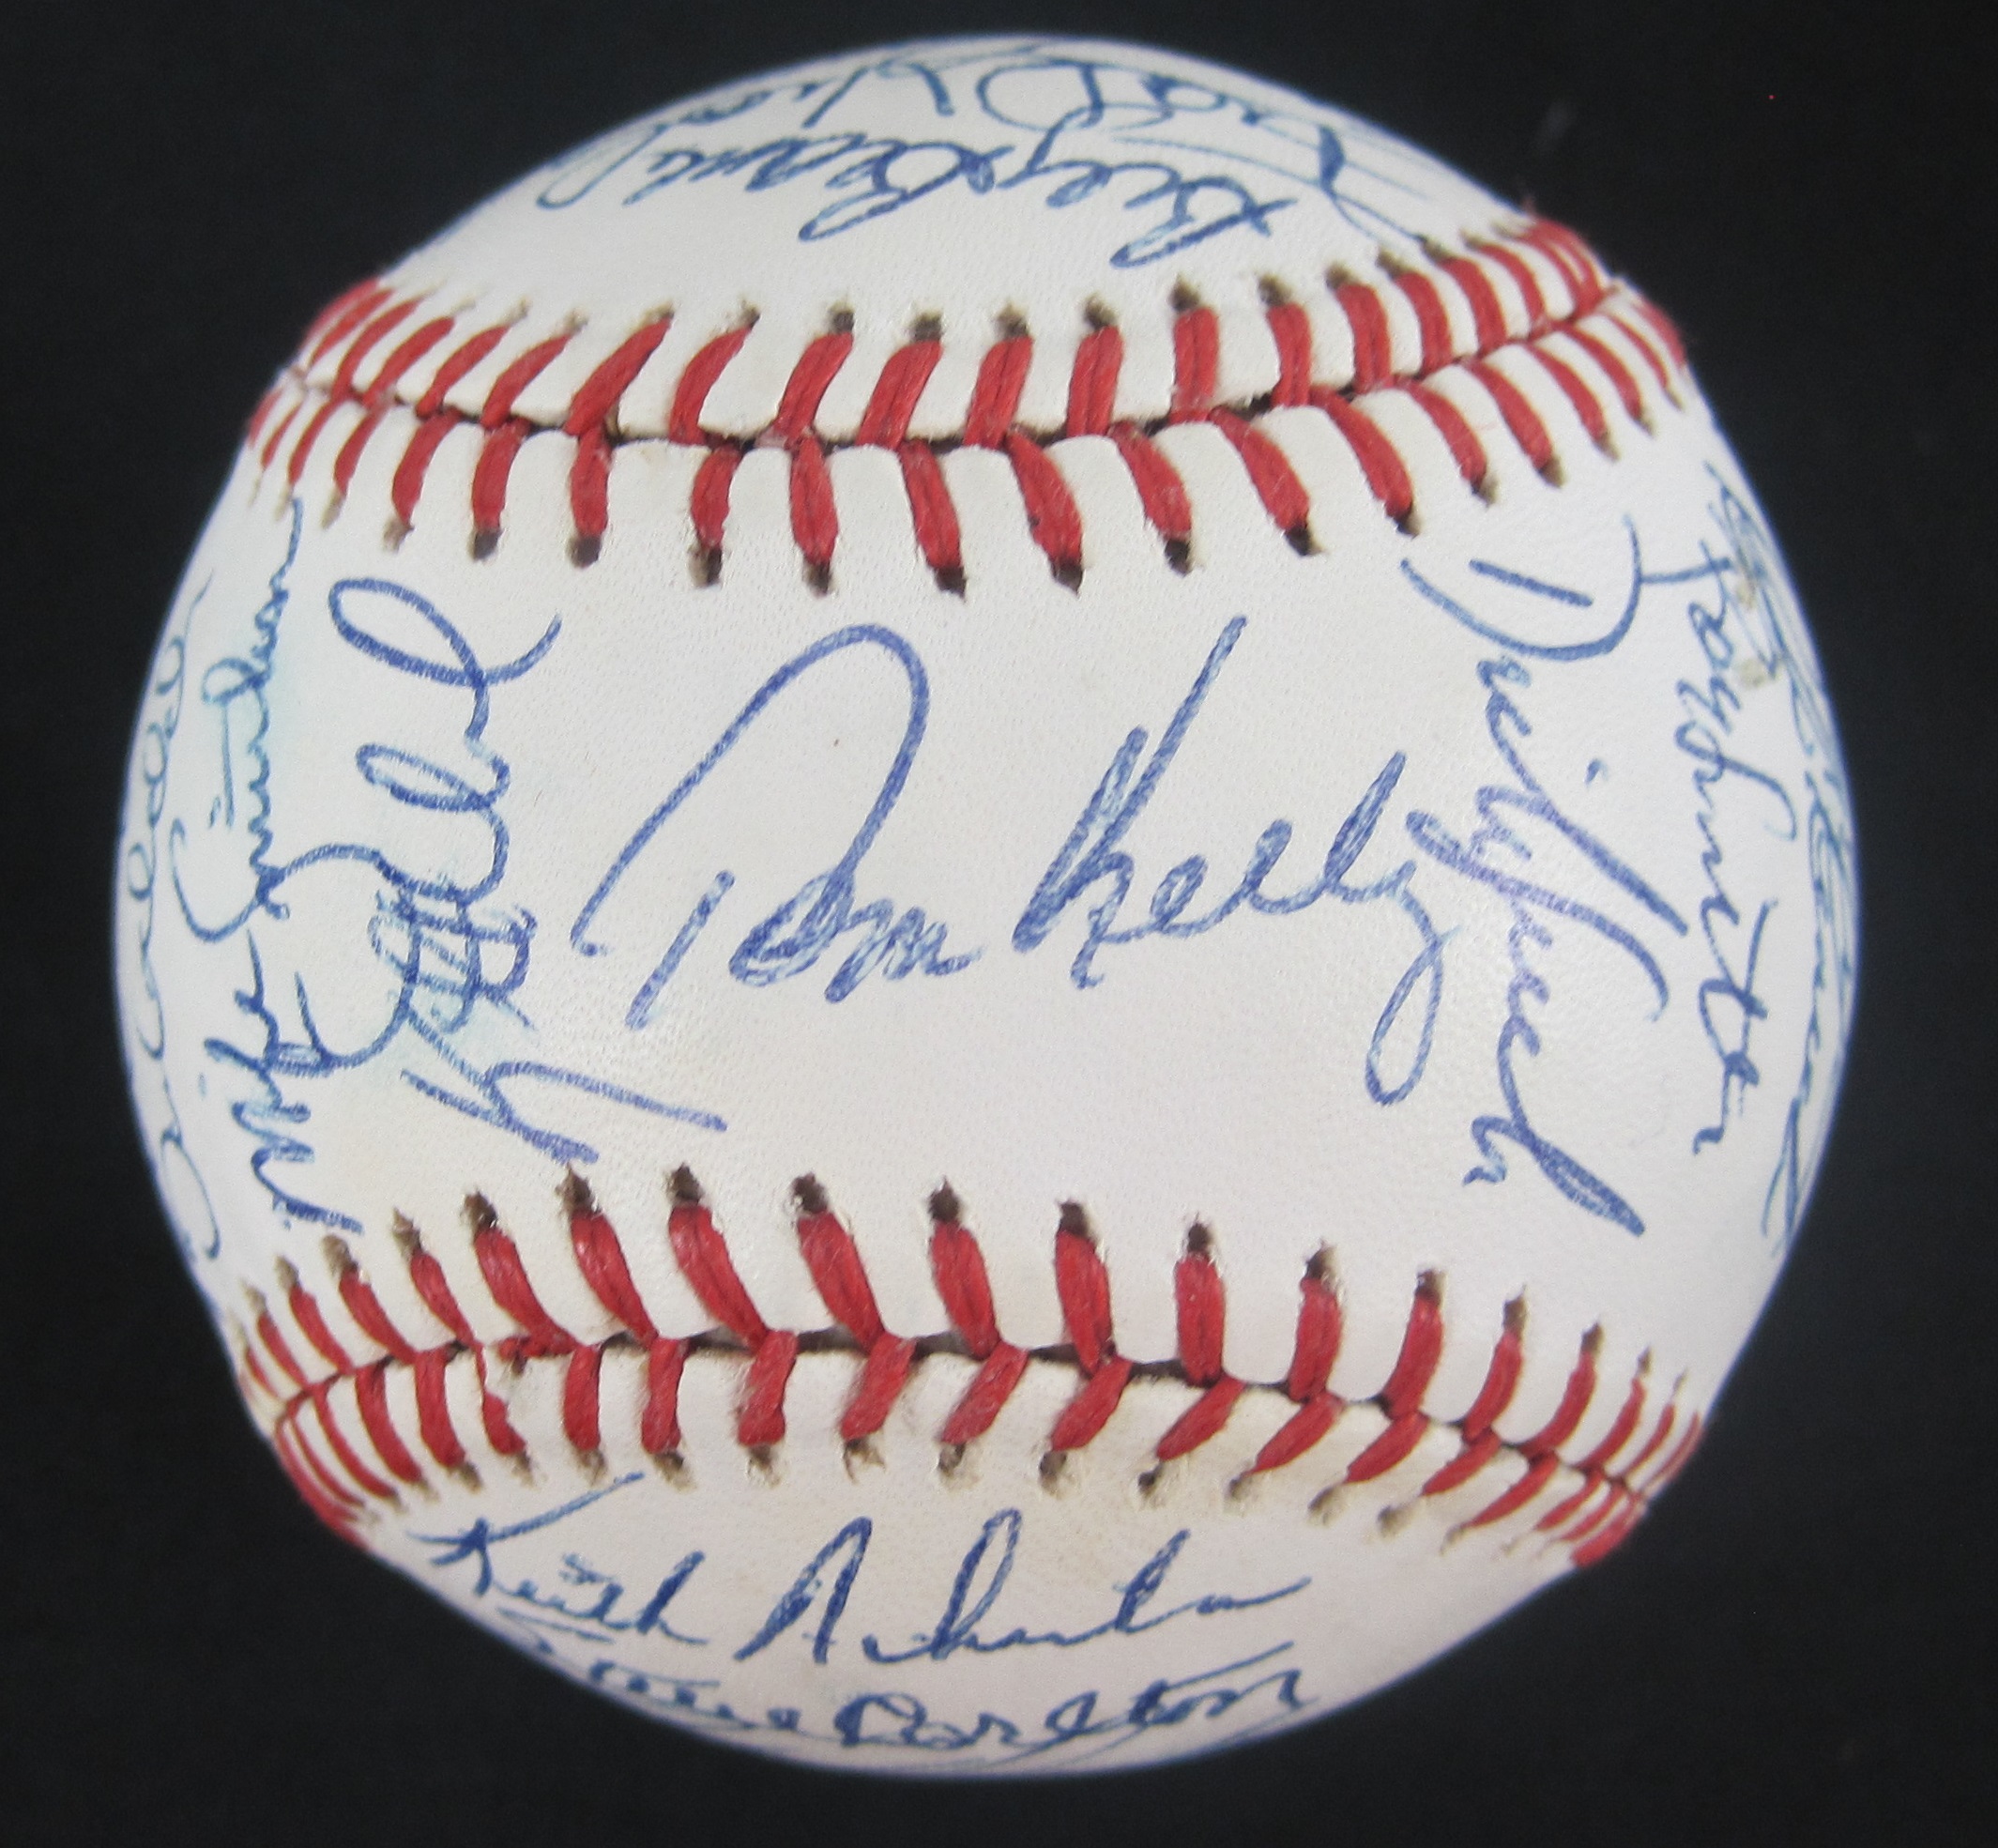 Billy Beane autographed baseball card (Minnesota Twins) 1987 Topps #114